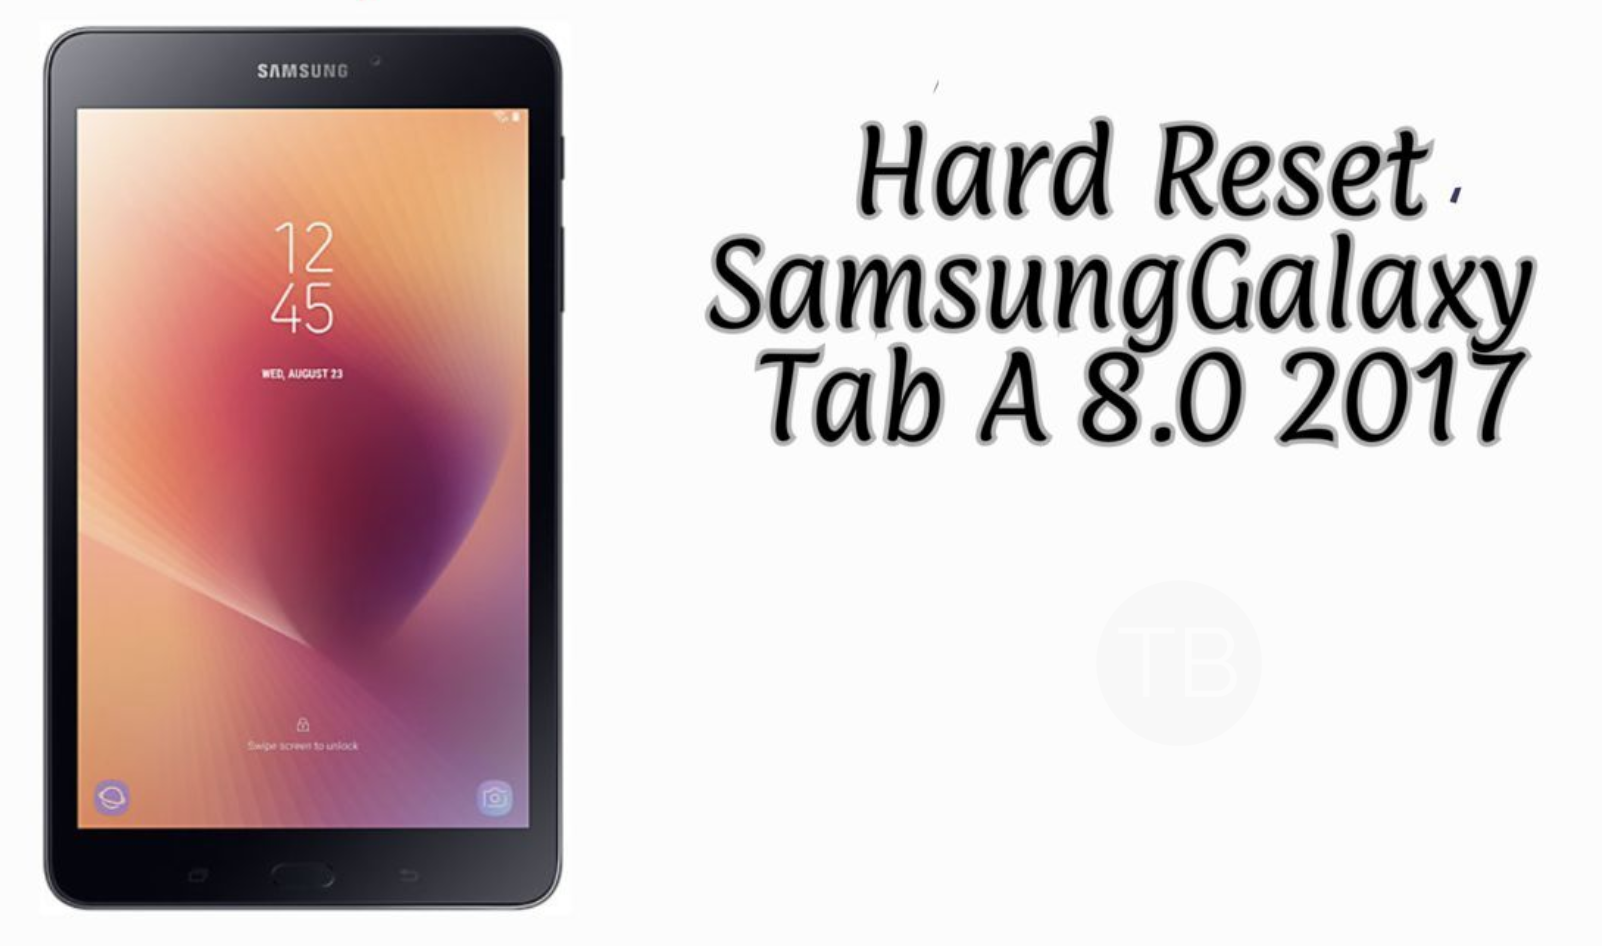 How to Hard Reset Samsung Galaxy Tab A 23.23 22317  TechBeasts